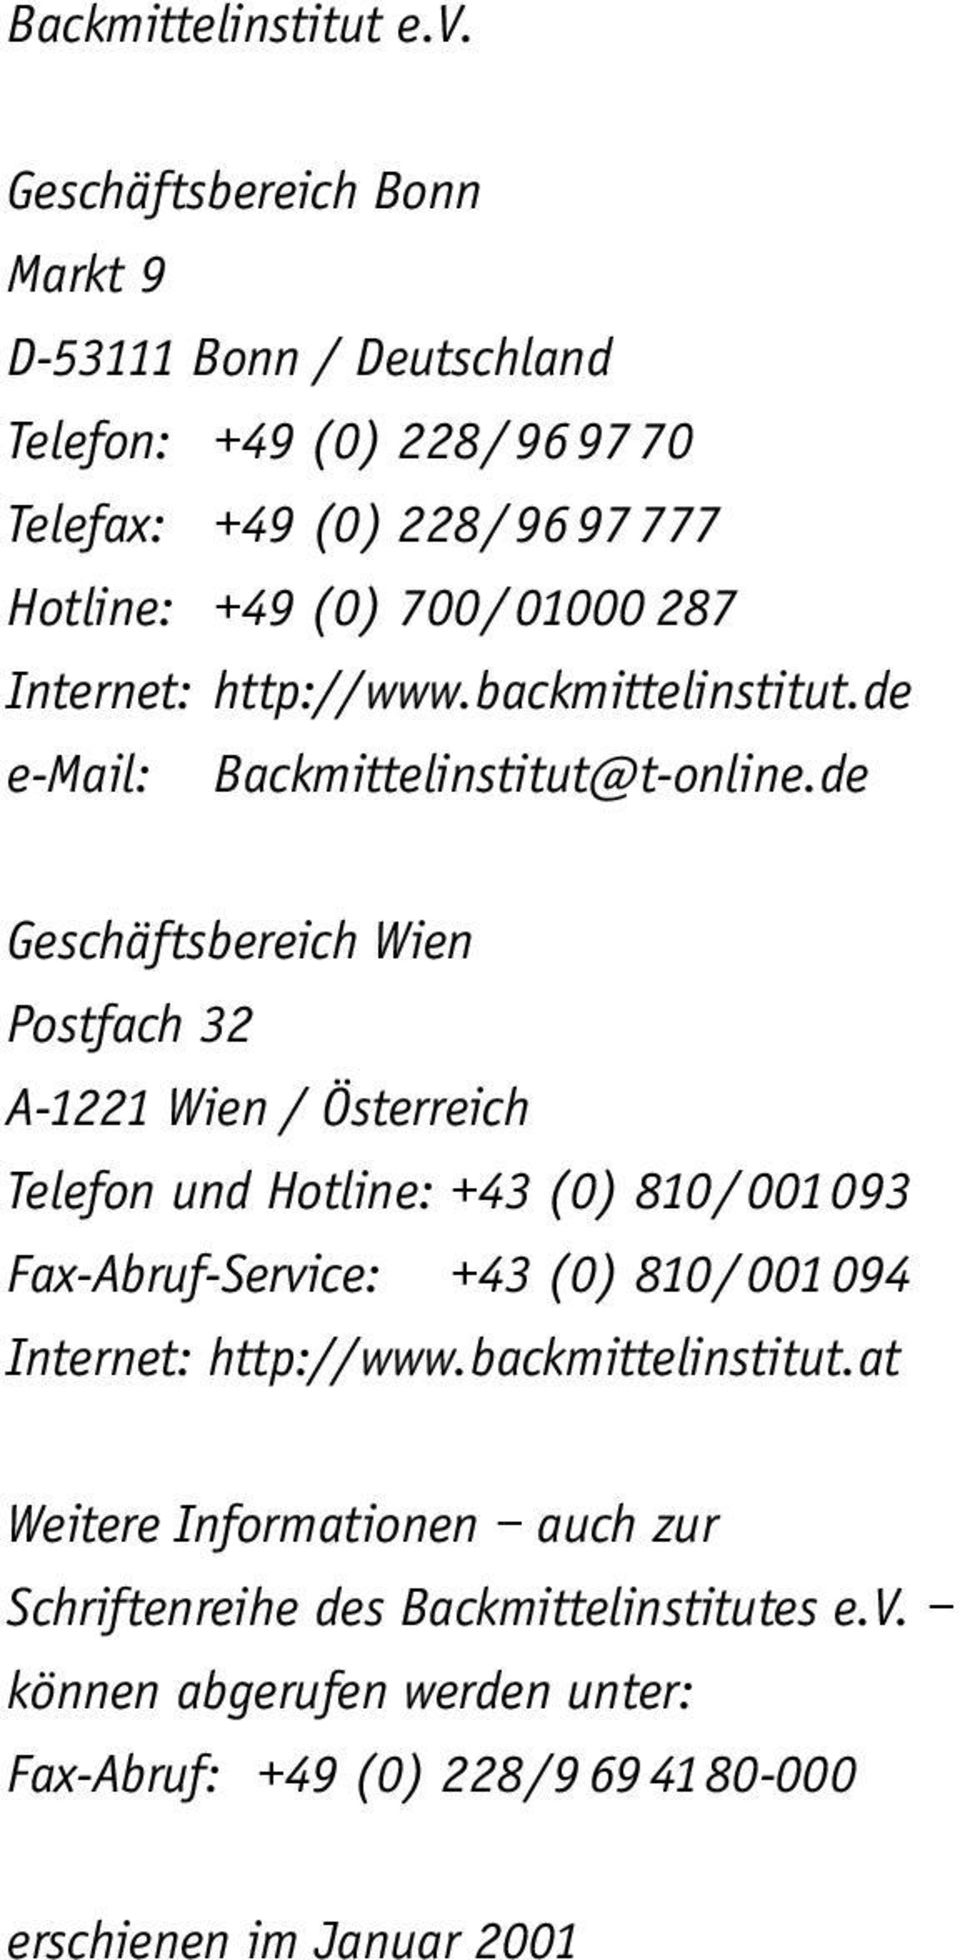 Internet: http://www.backmittelinstitut.de e-mail: Backmittelinstitut@t-online.